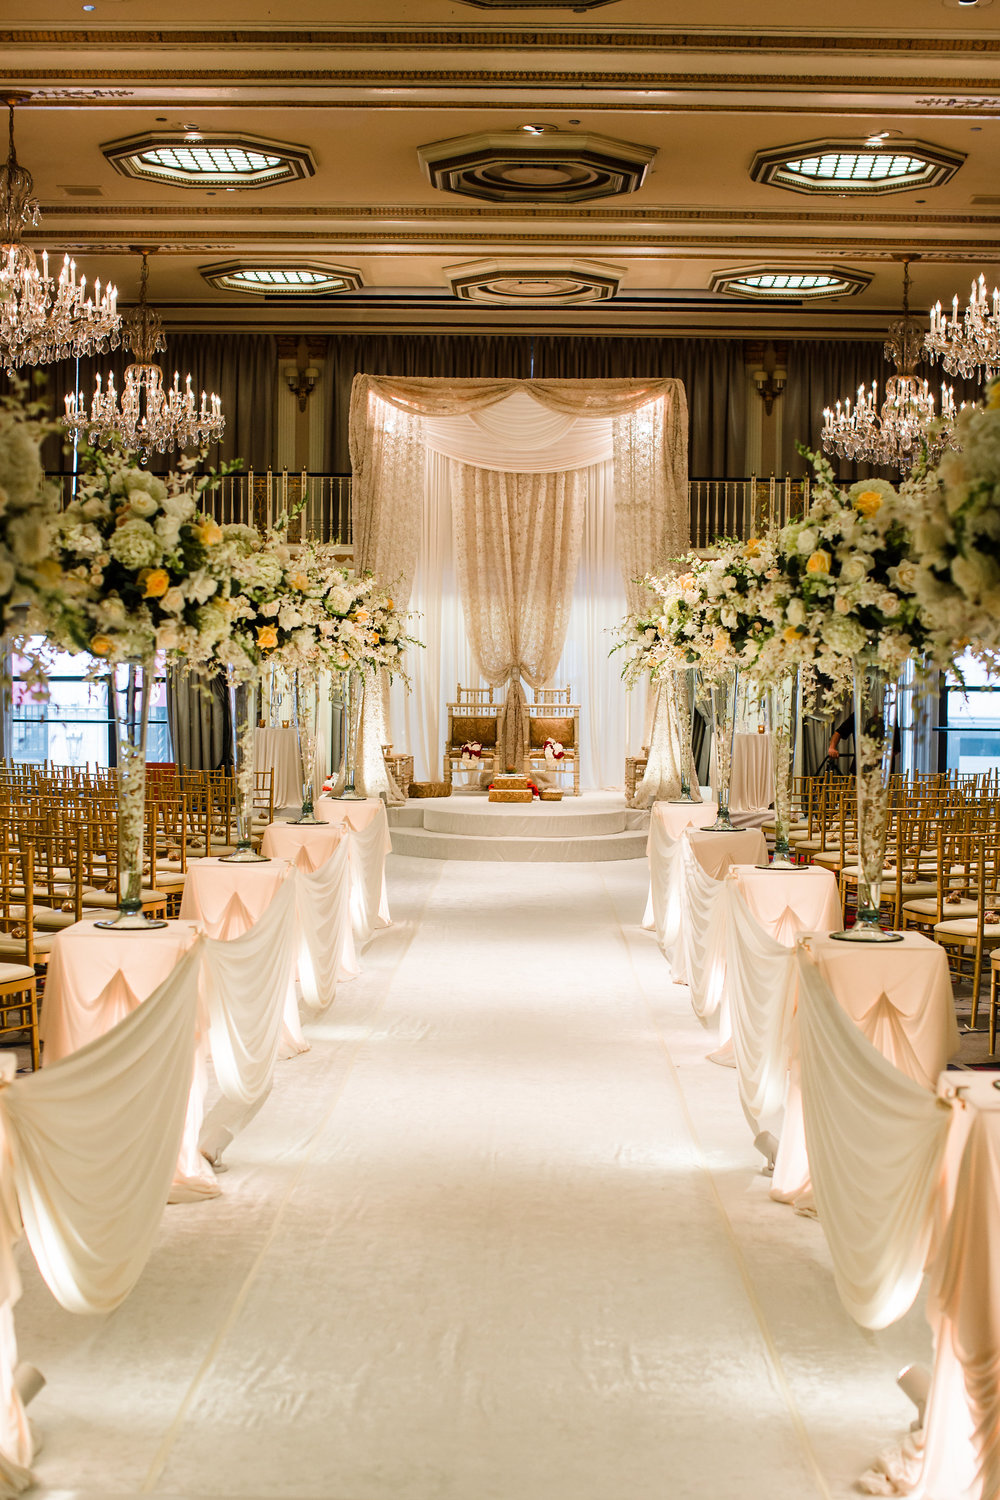 Drake hotel wedding ceremony aisle with decor